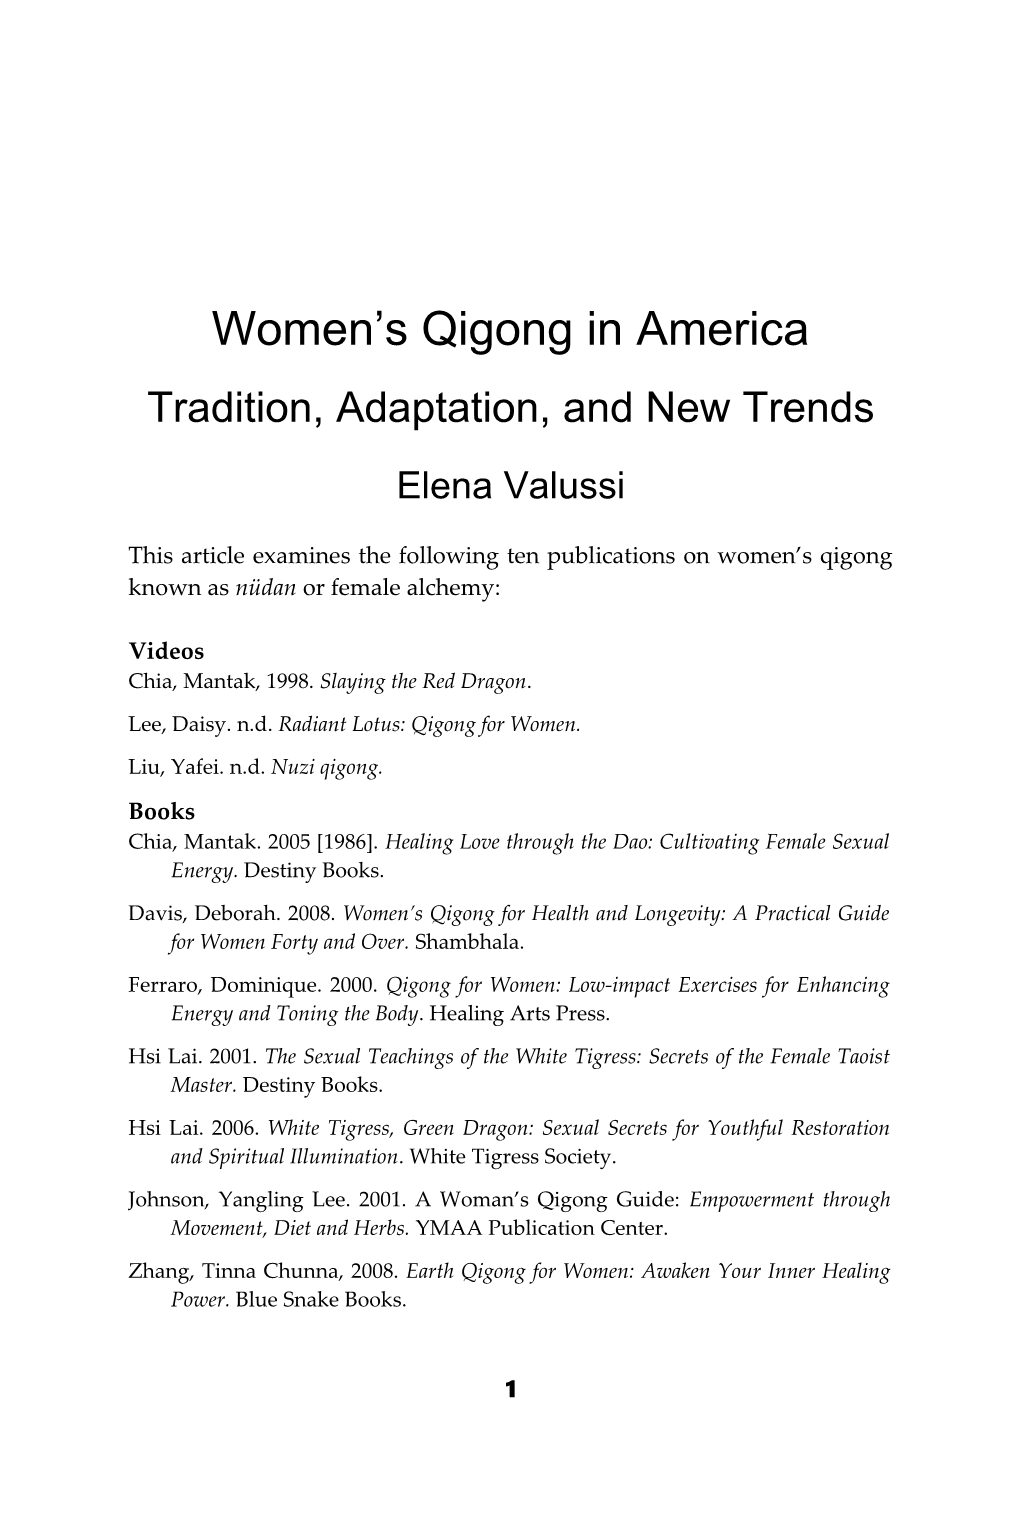 Valussi, Women's Qigong in America / 1